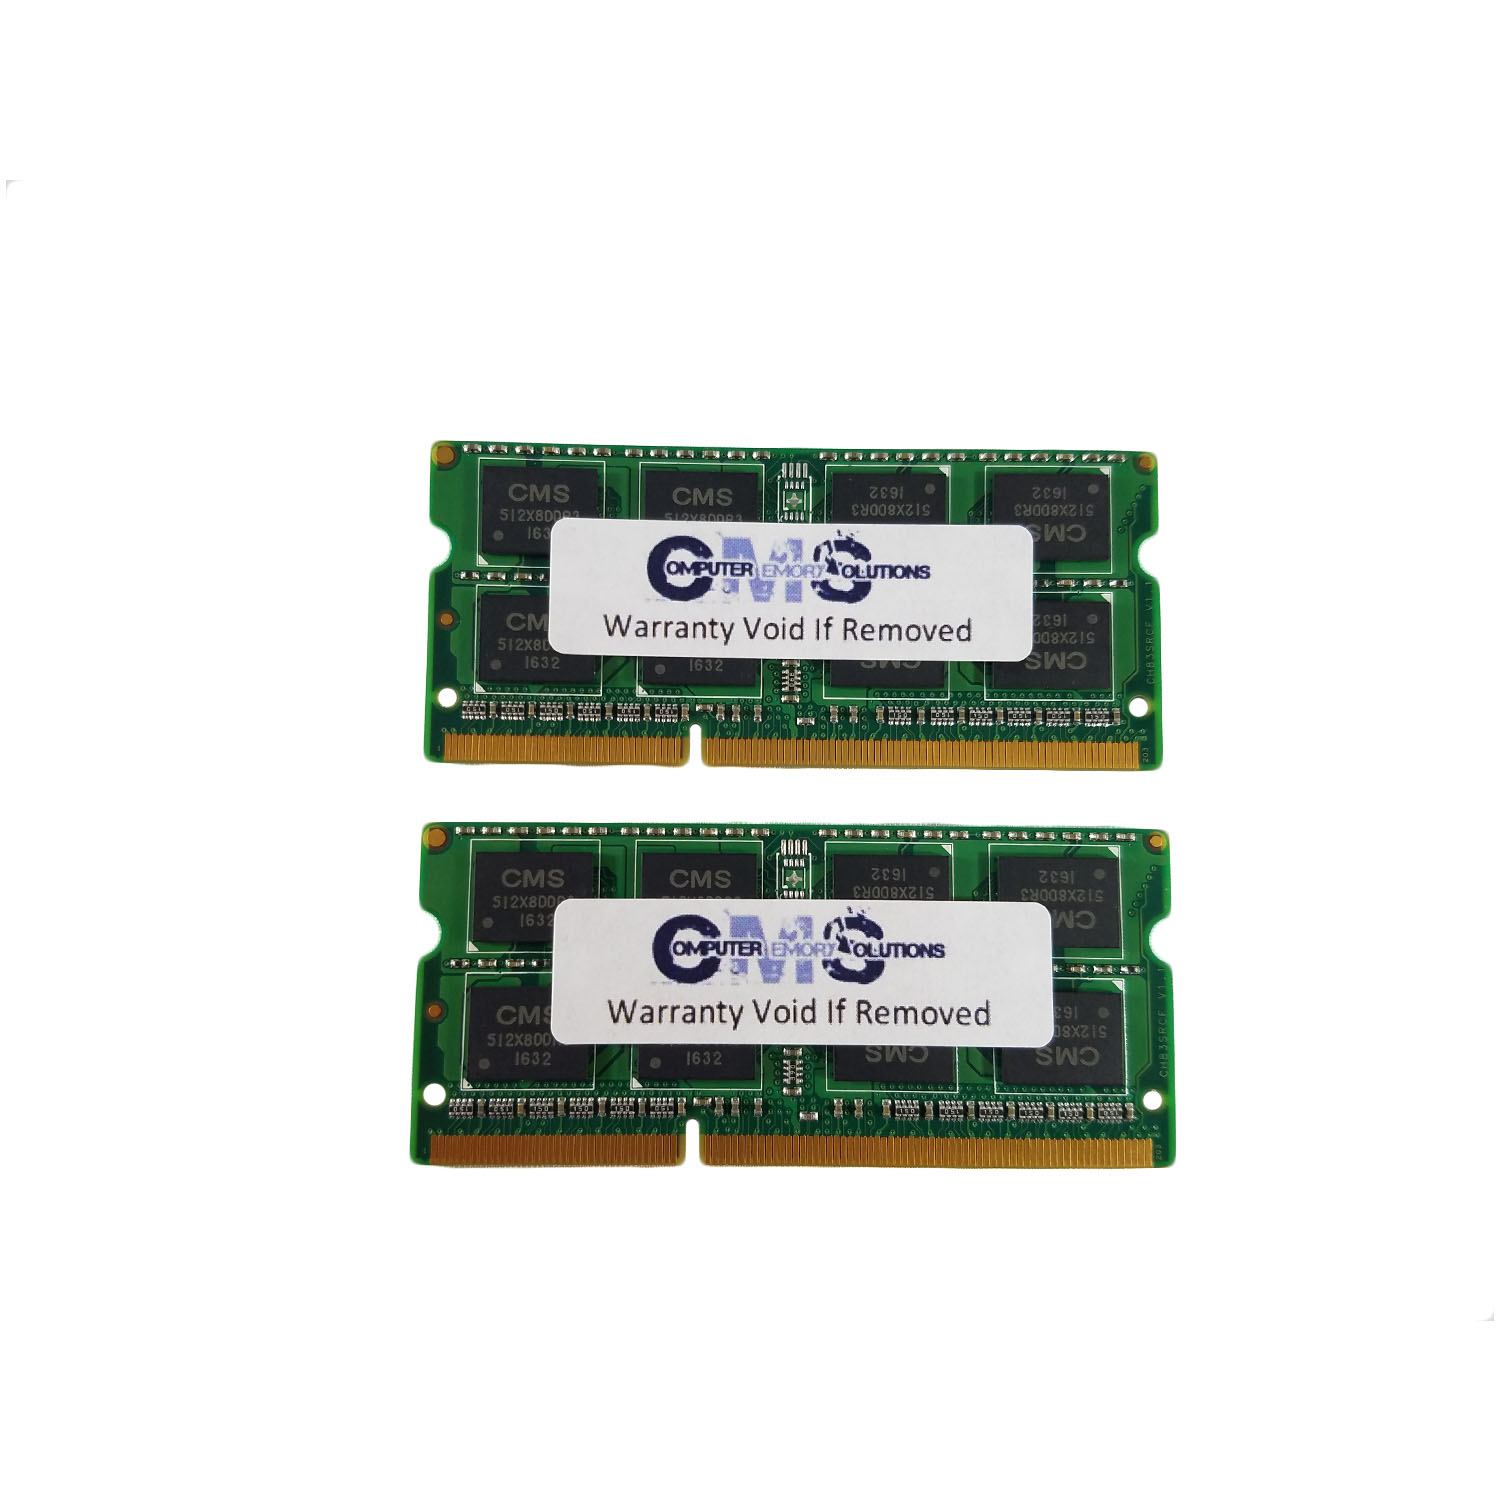 CMS 8GB (2X4GB) DDR3 10600 1333MHZ NON ECC SODIMM Memory Ram Compatible with Panasonic Toughbook Cf-53, Cf-53A, Cf-53C, Cf-53E, Cf-53F - A29 - image 1 of 2